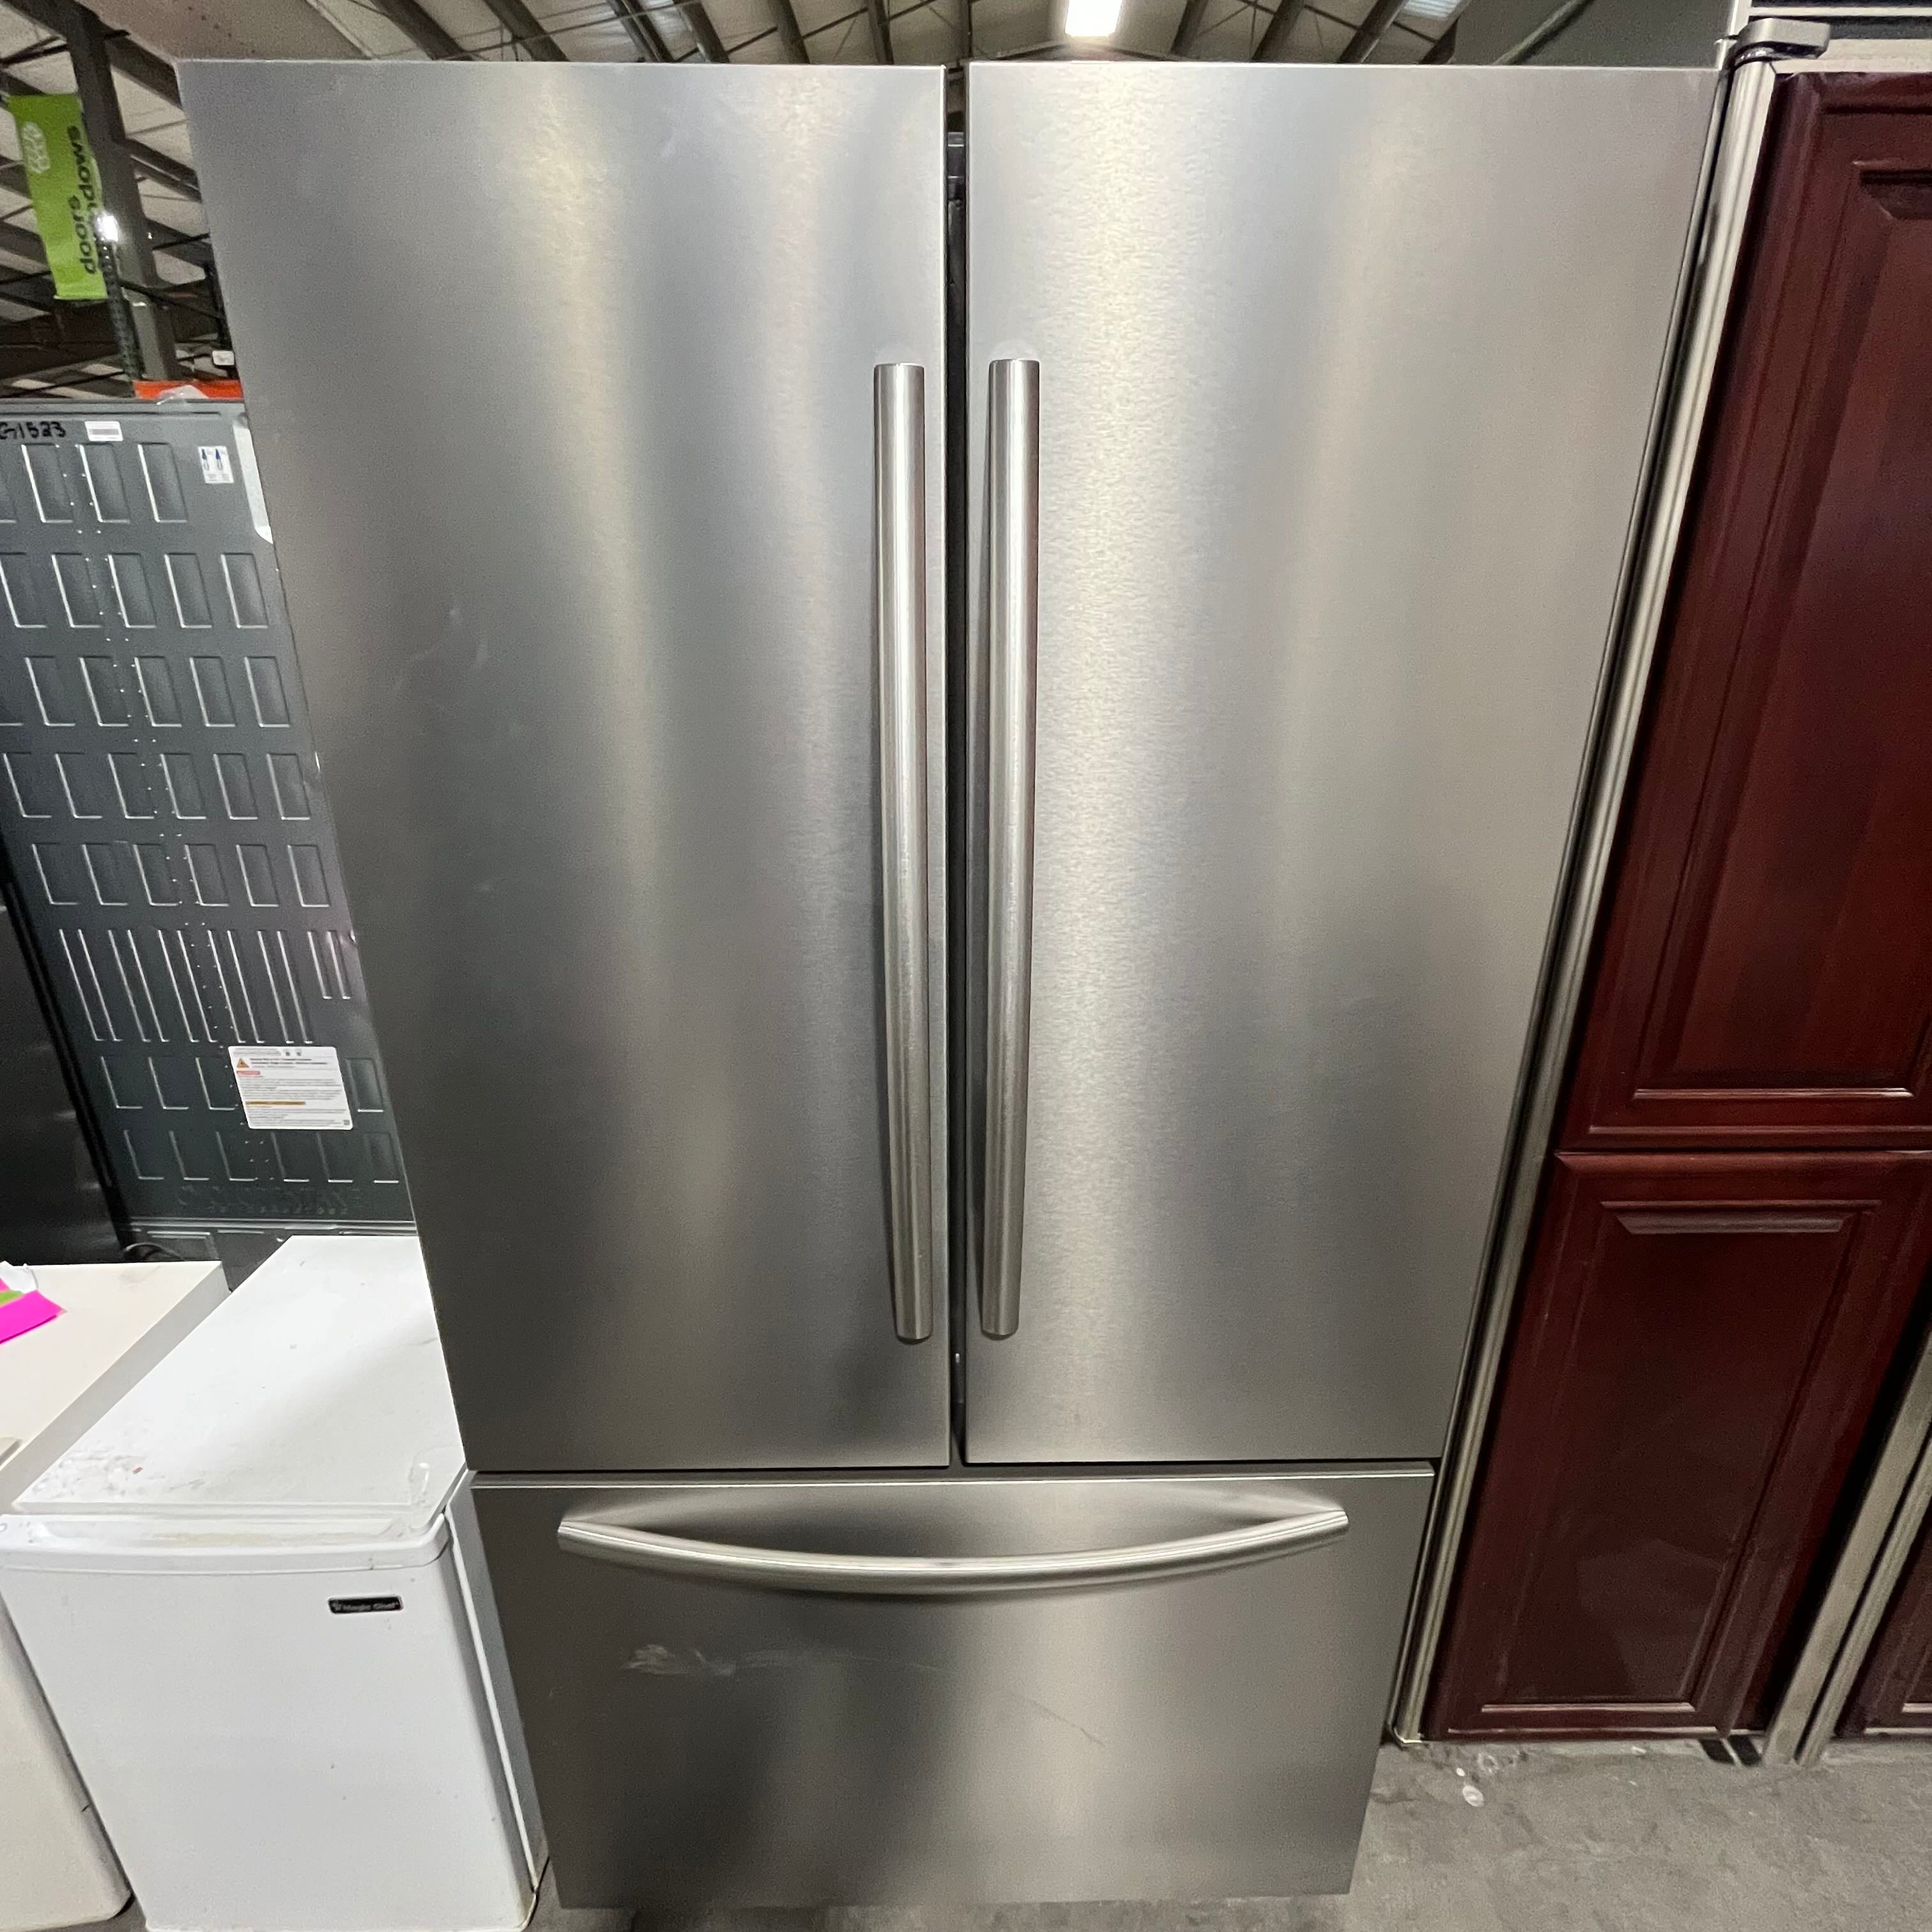 G423 Mora French Door Stainless Steel Refrigerator